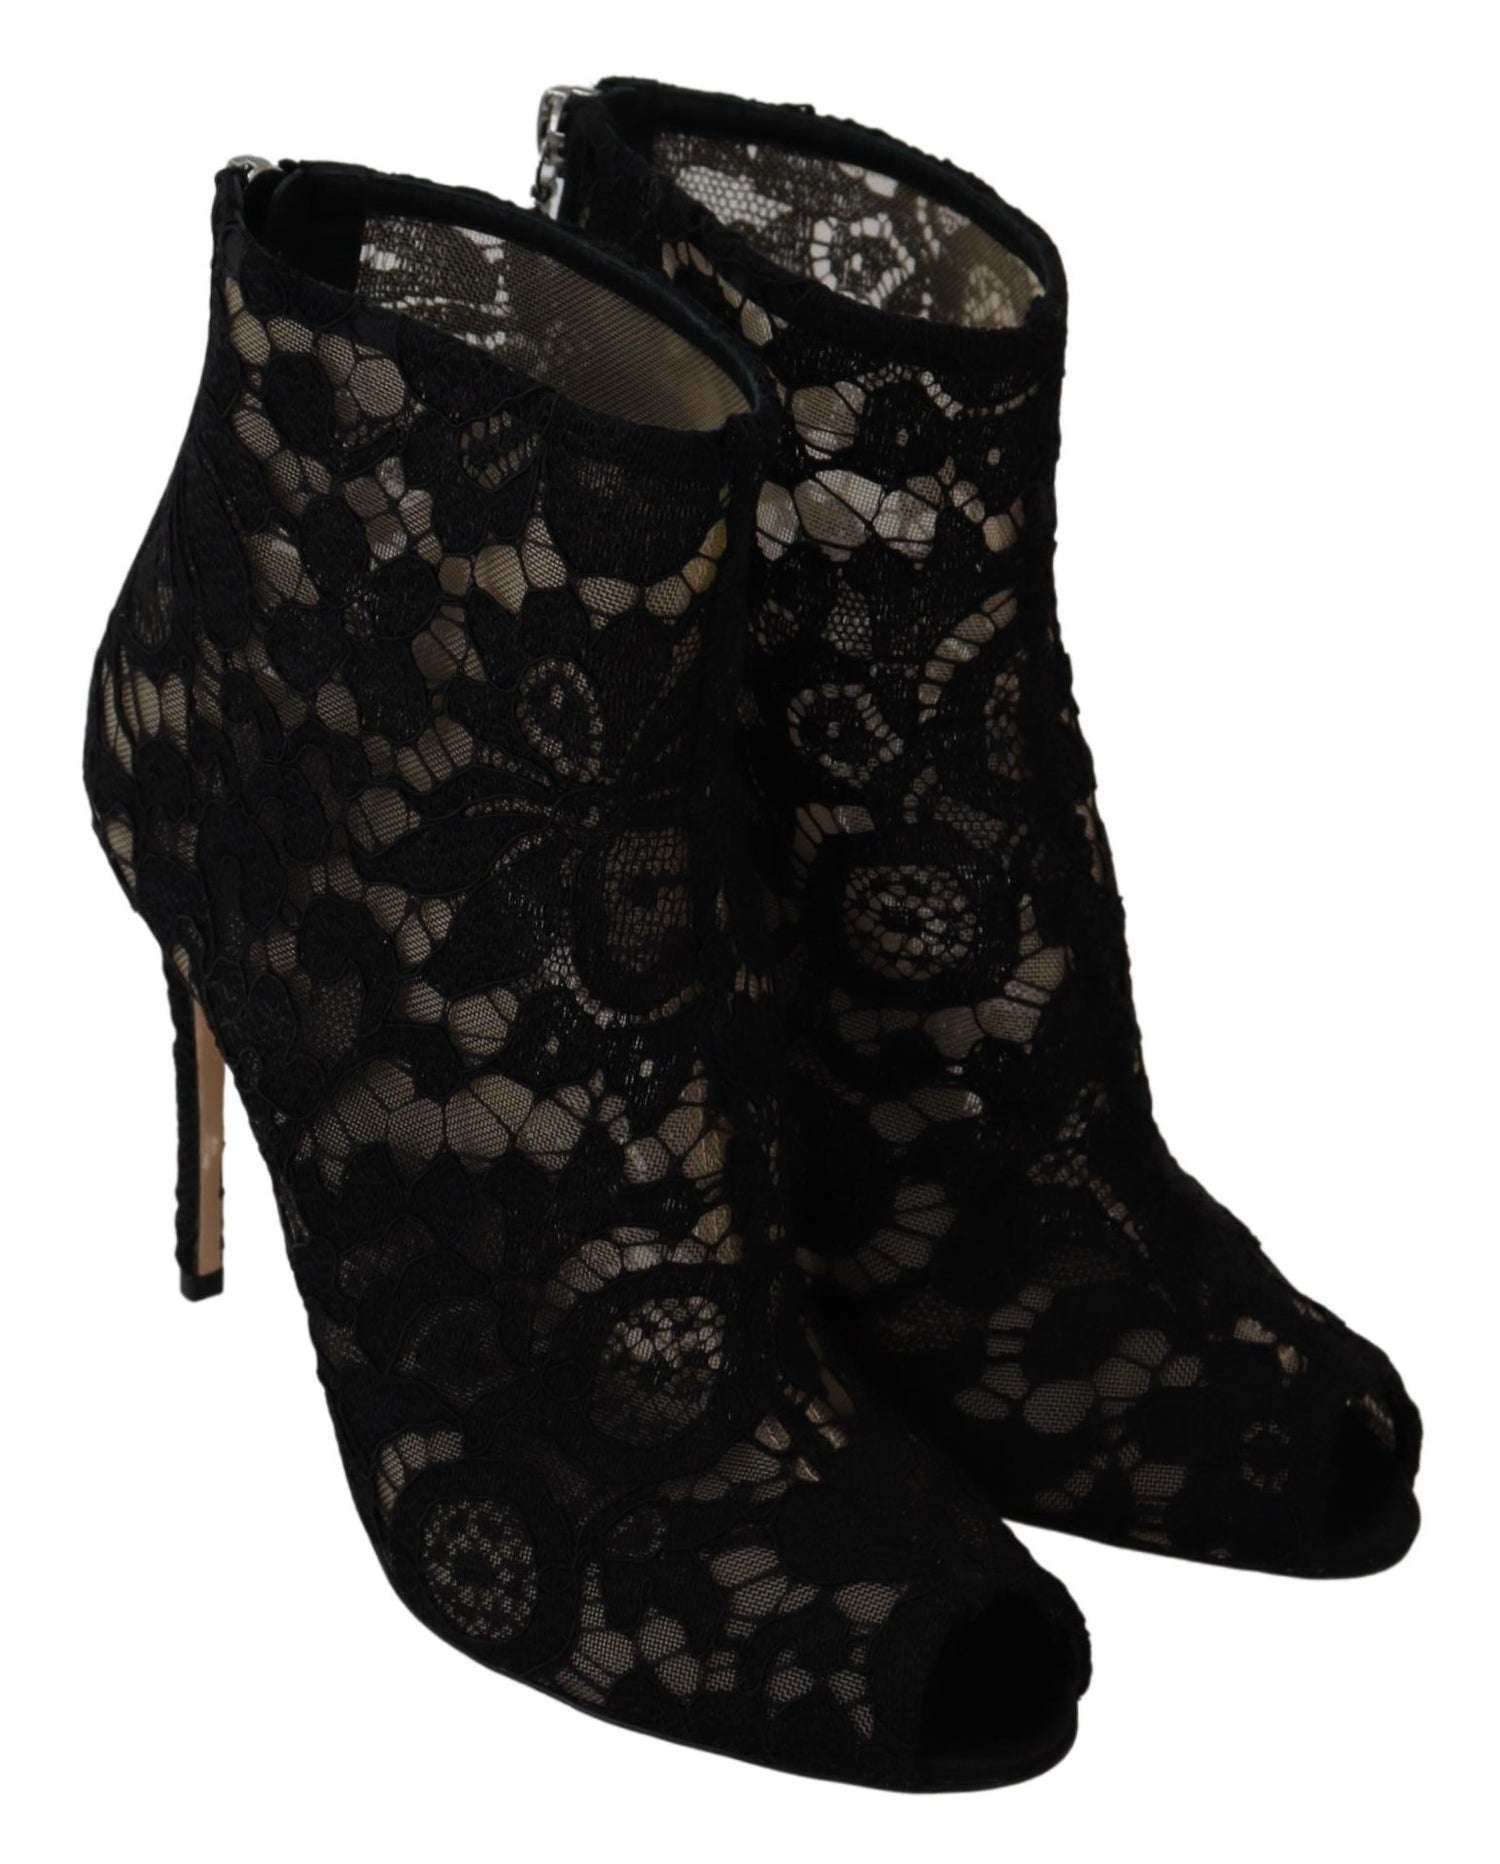 Black Taormina Lace Booties Stilettos Shoes